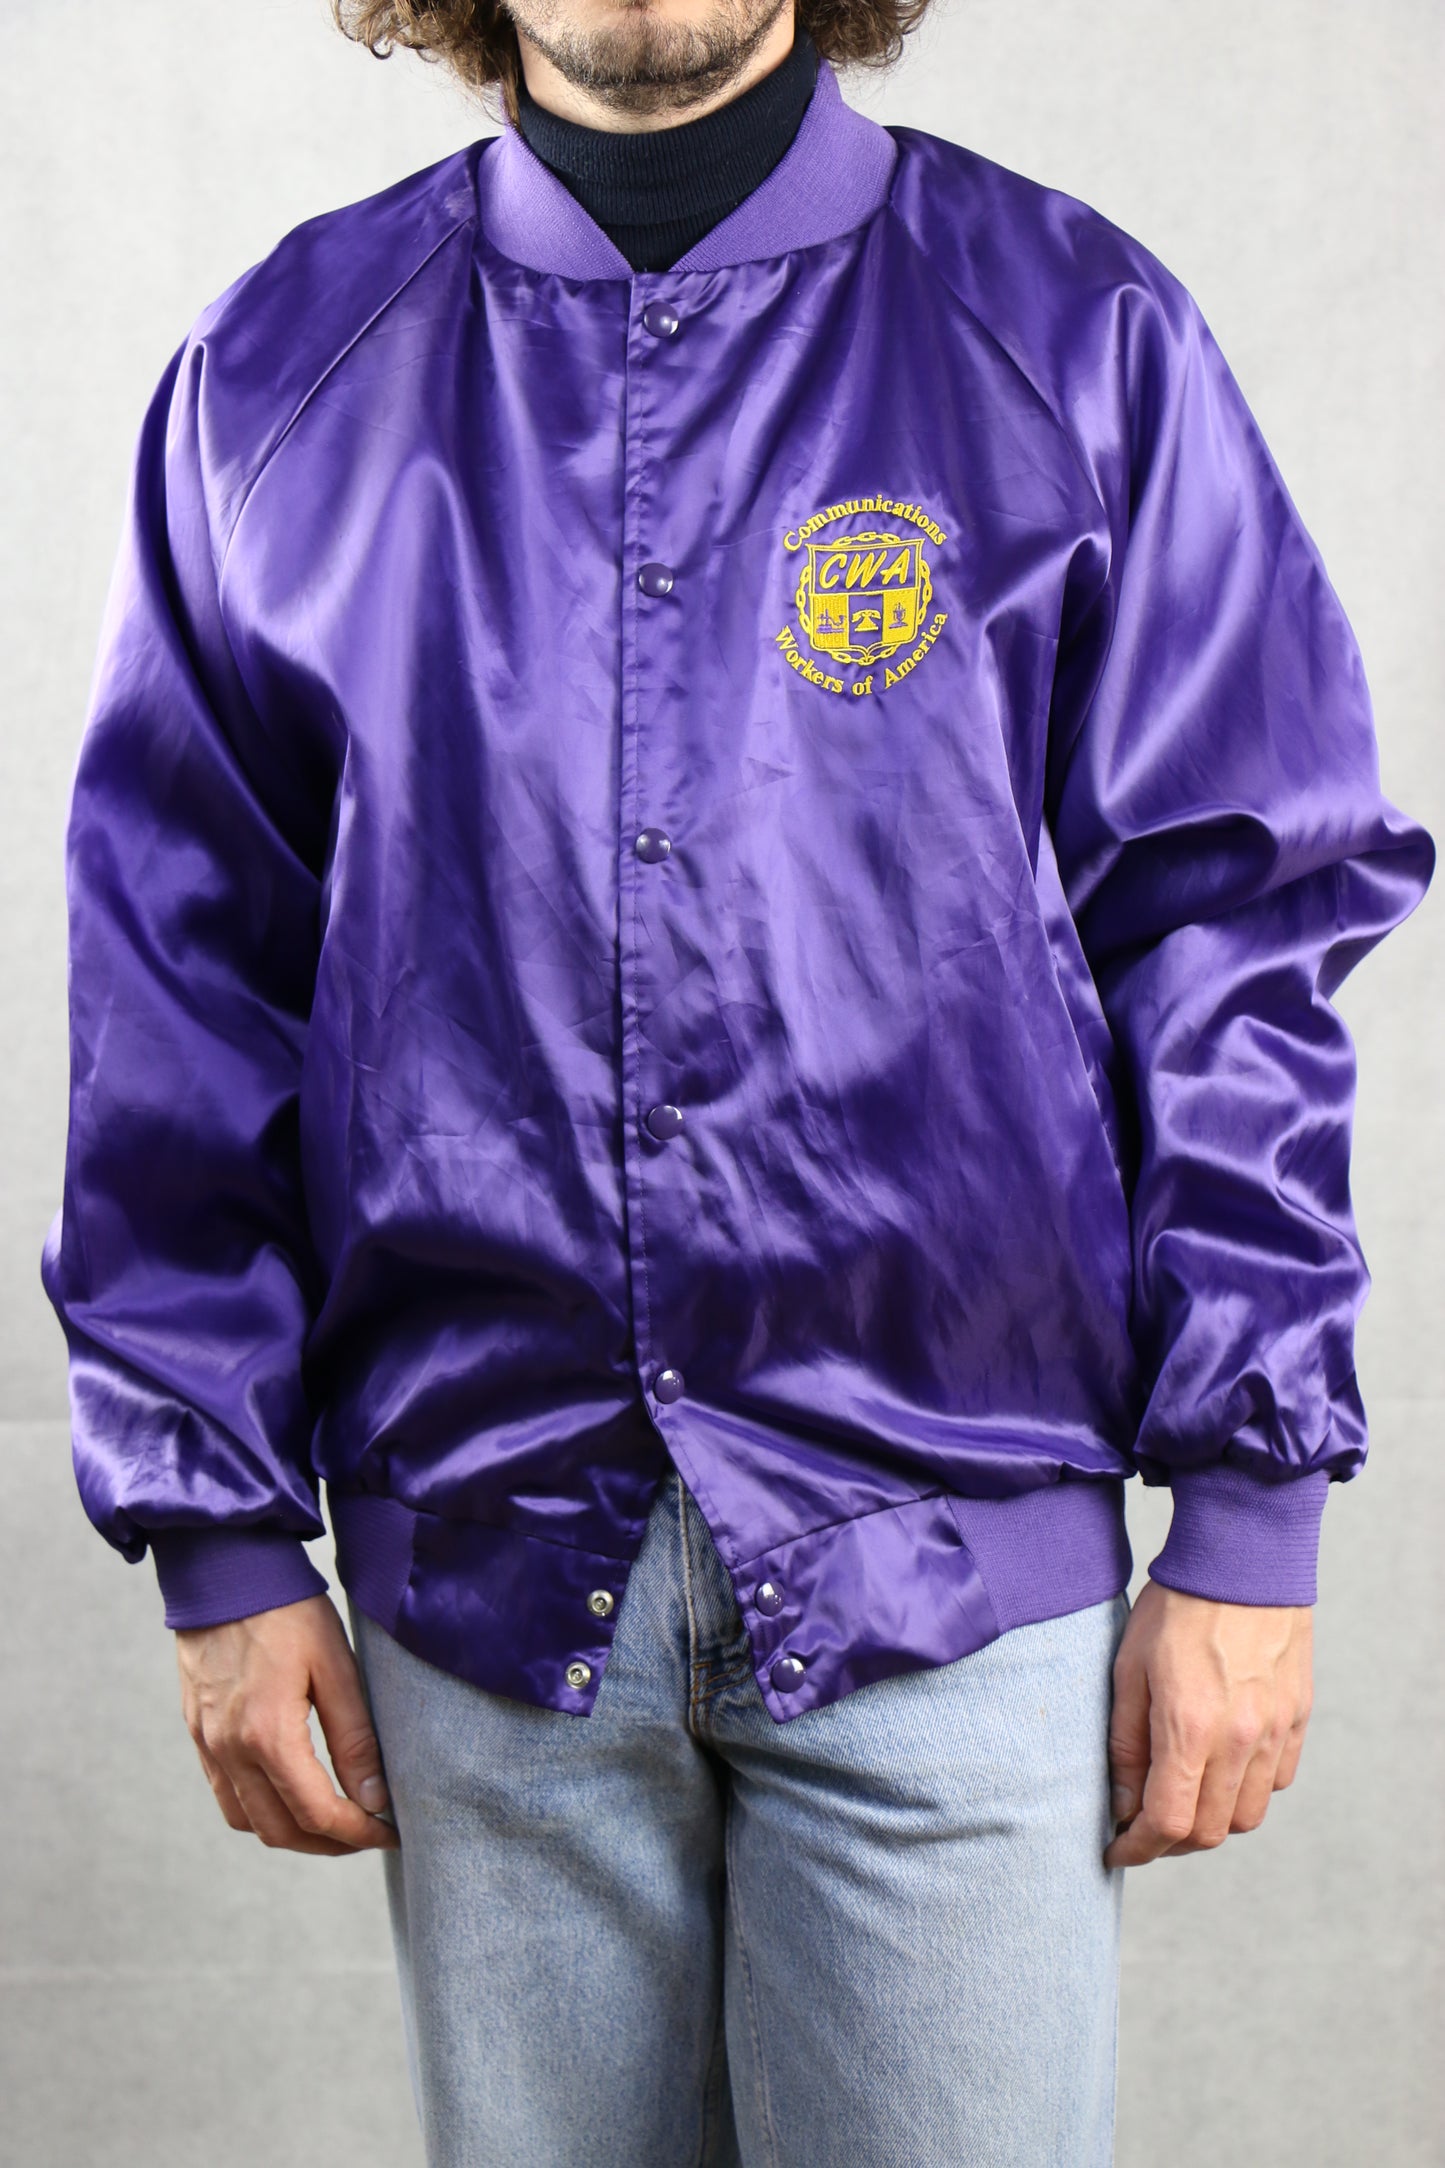 Satin Purple Bomber Jacket - vintage clothing clochard92.com